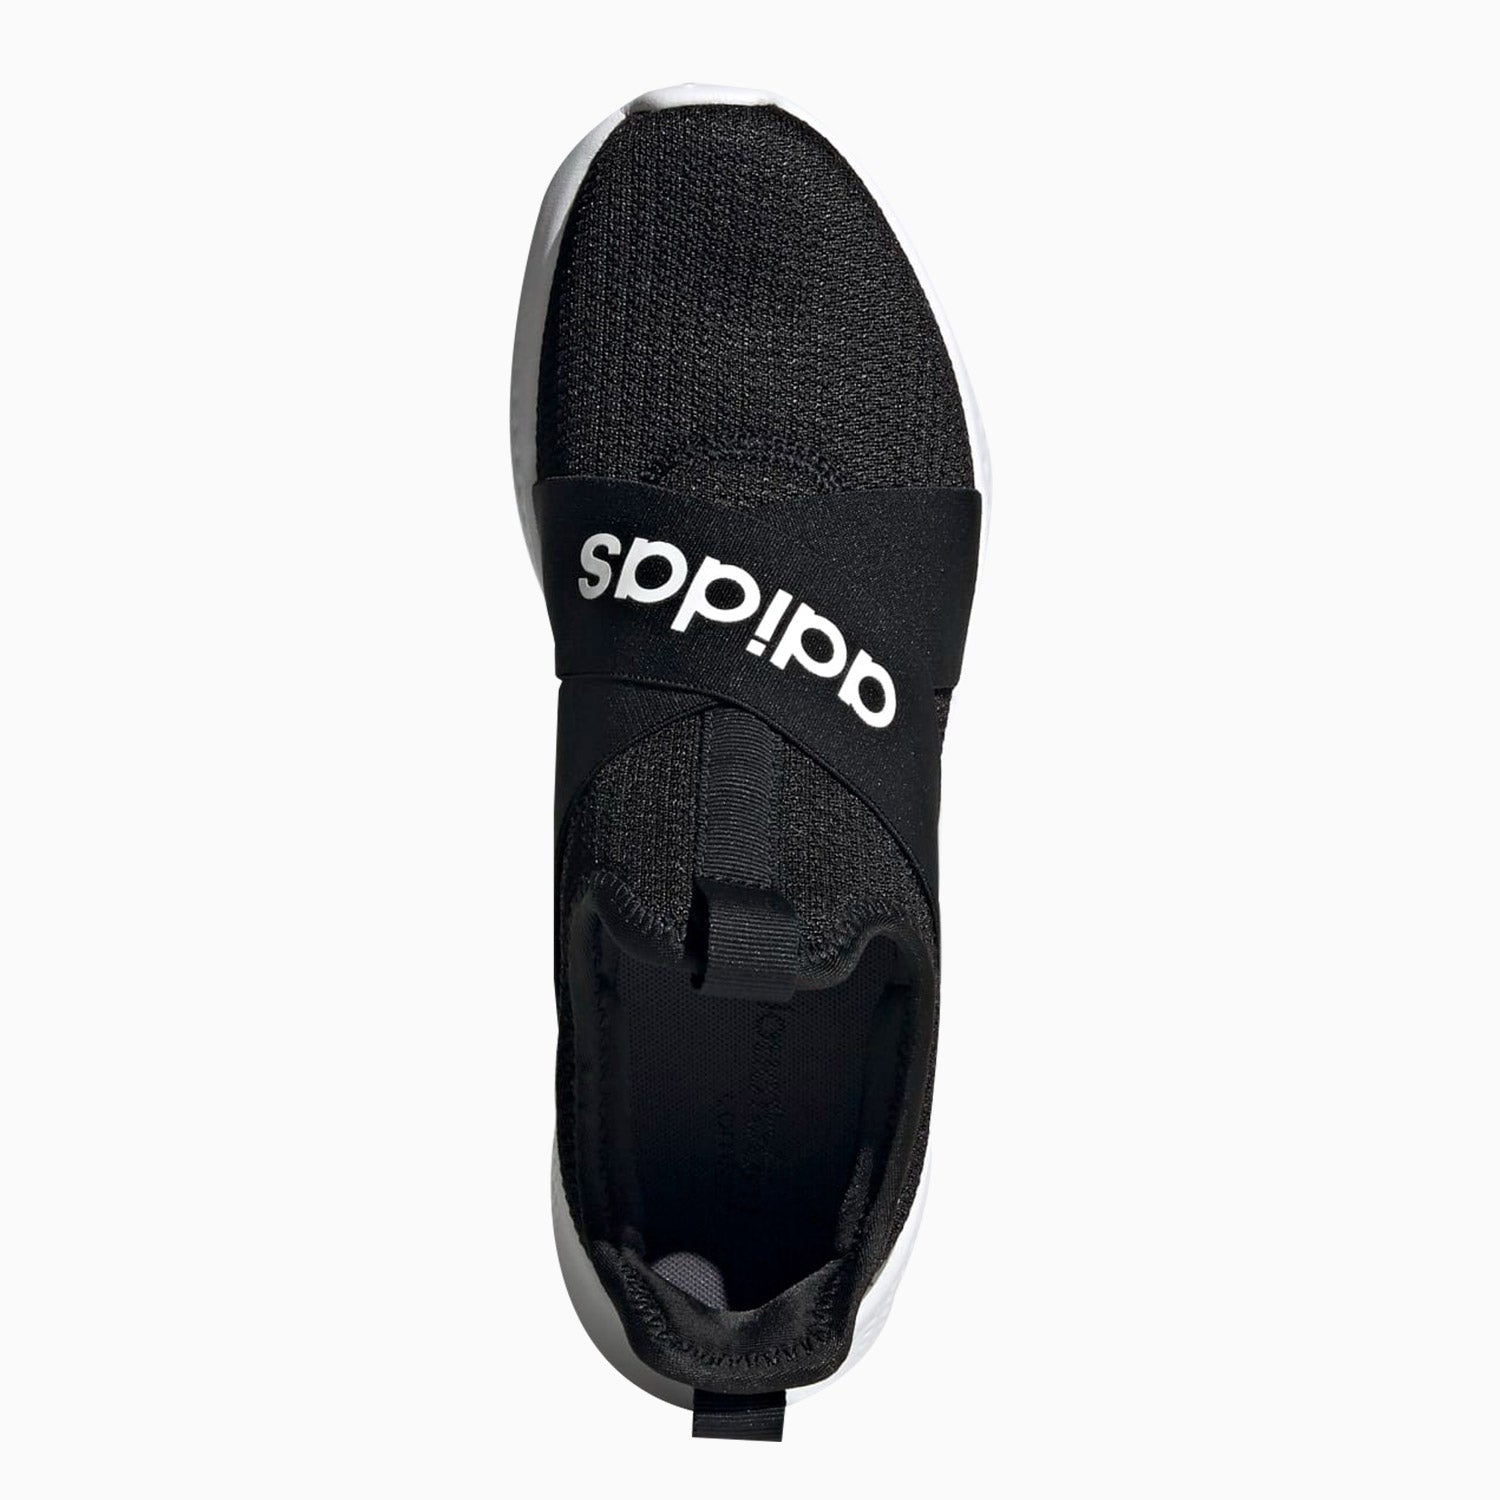 adidas-womens-essentials-puremotion-adapt-shoes-fx7326